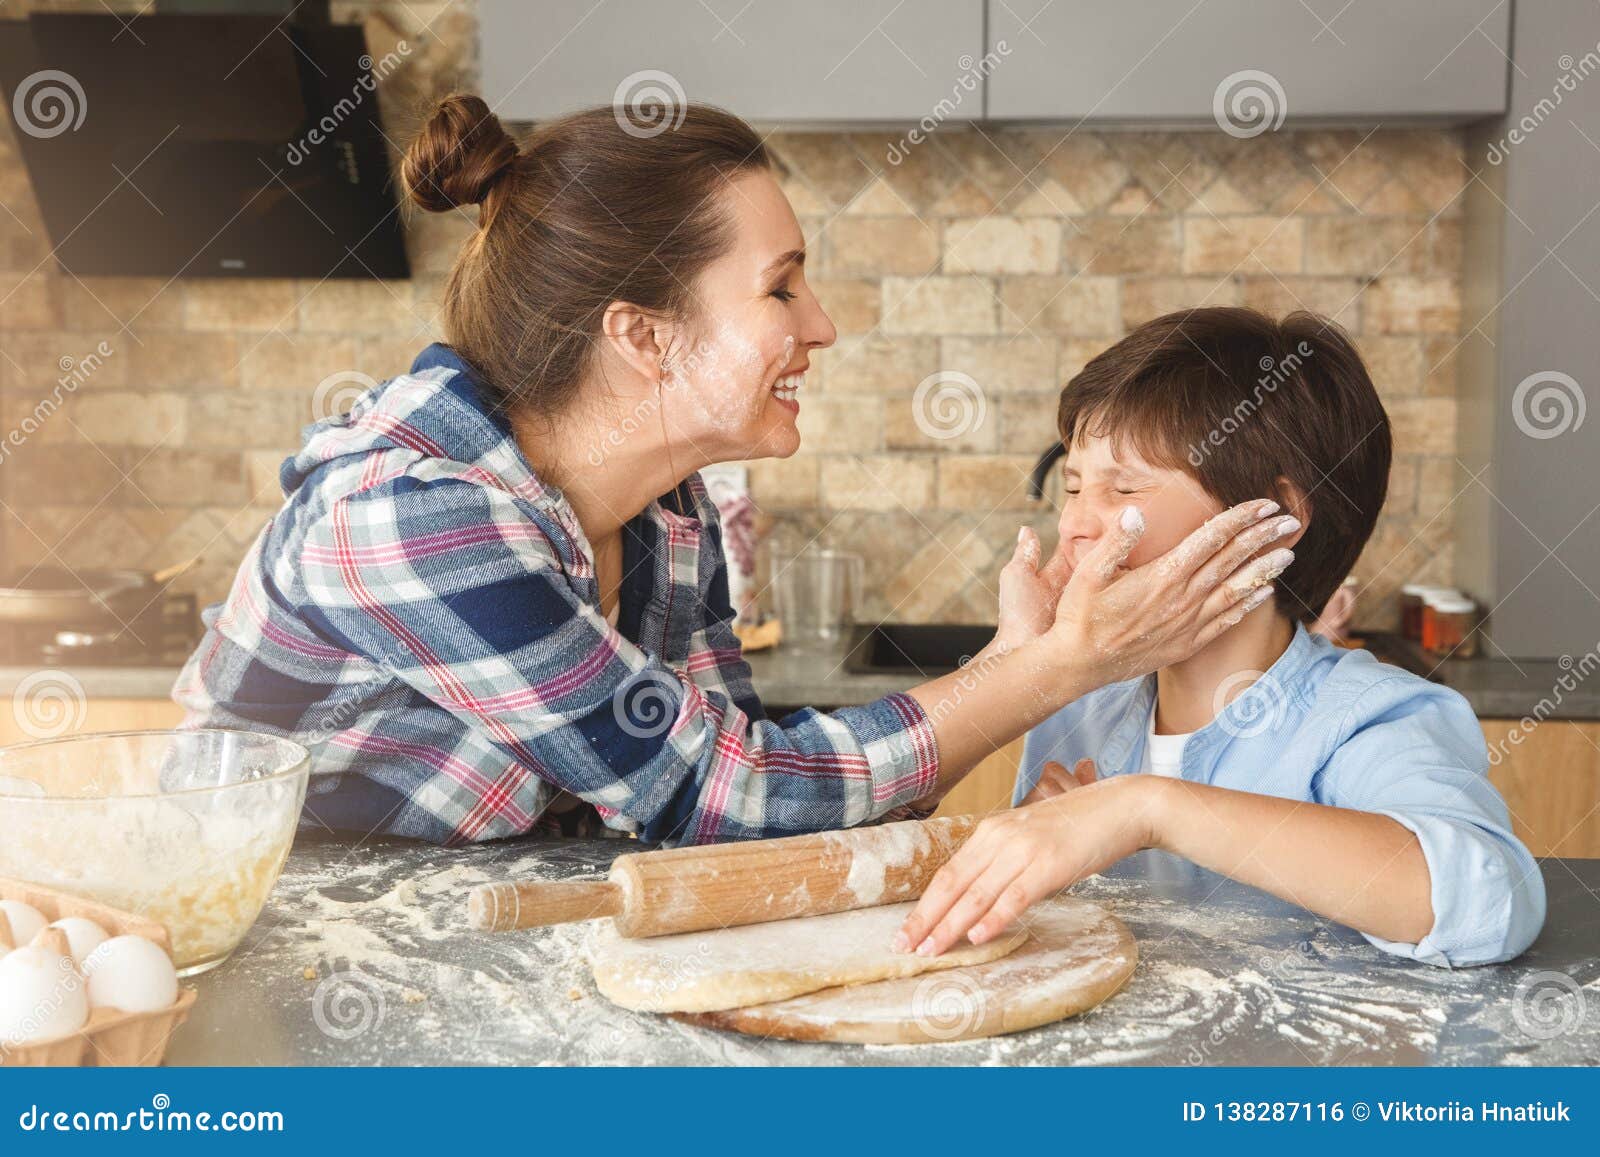 Мамочки с грязными разговорами. Две взрослые женщины пекут пирог. Mother standing at Home. Mother touching son nose. Child hands on flour.